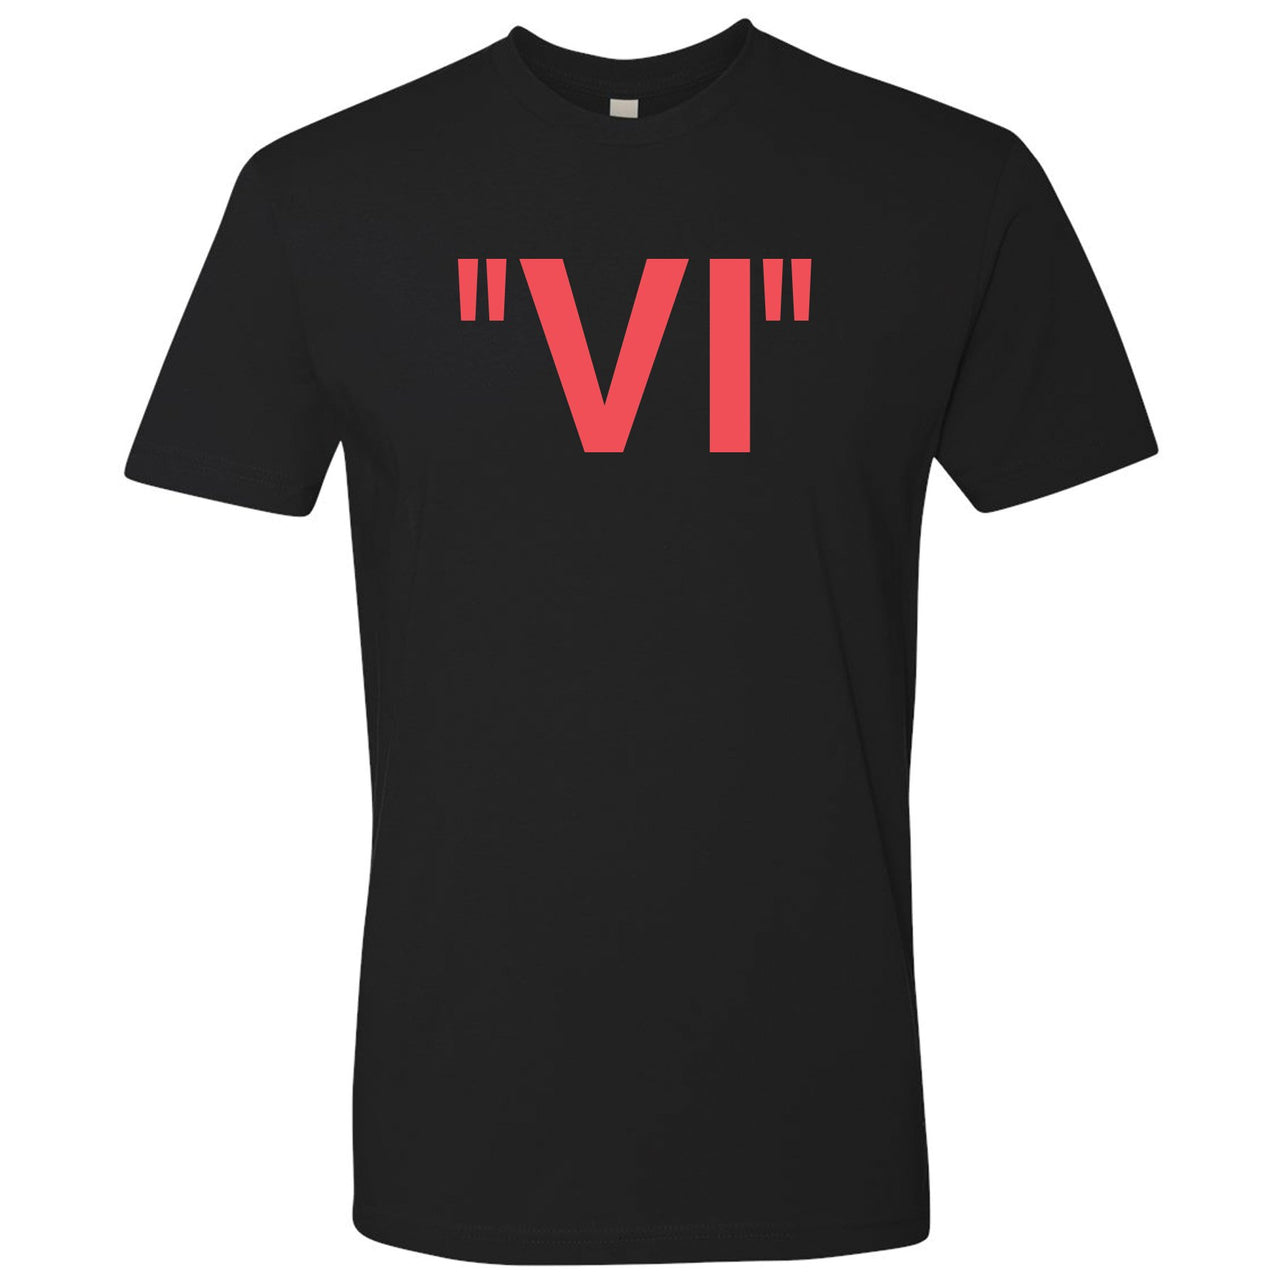 Infrared 6s T Shirt | VI, Black